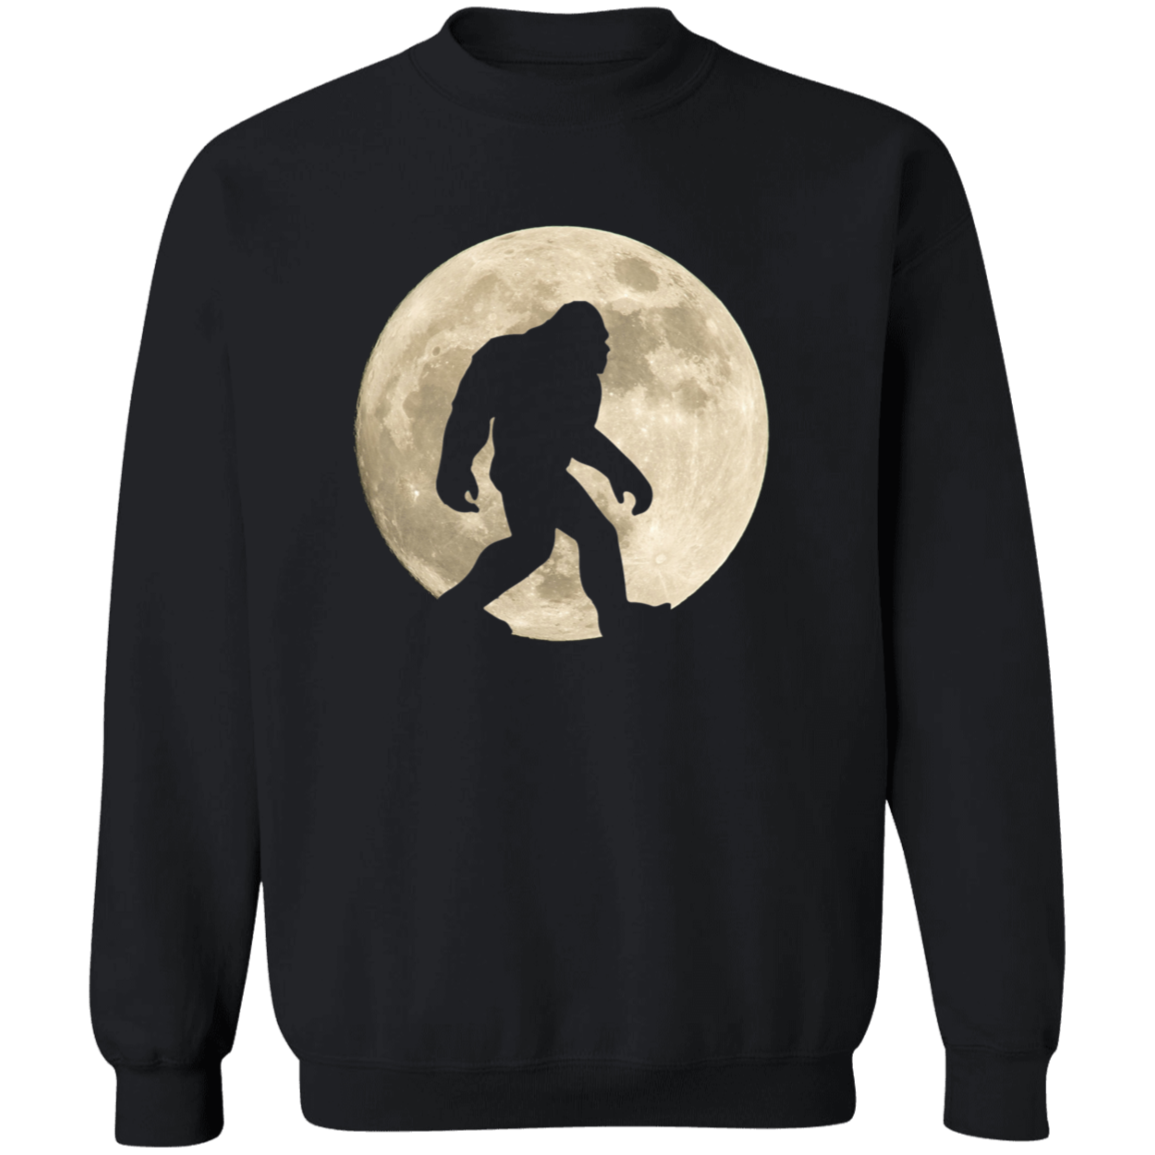 Sasquatch Moon - T-shirts, Hoodies and Sweatshirts